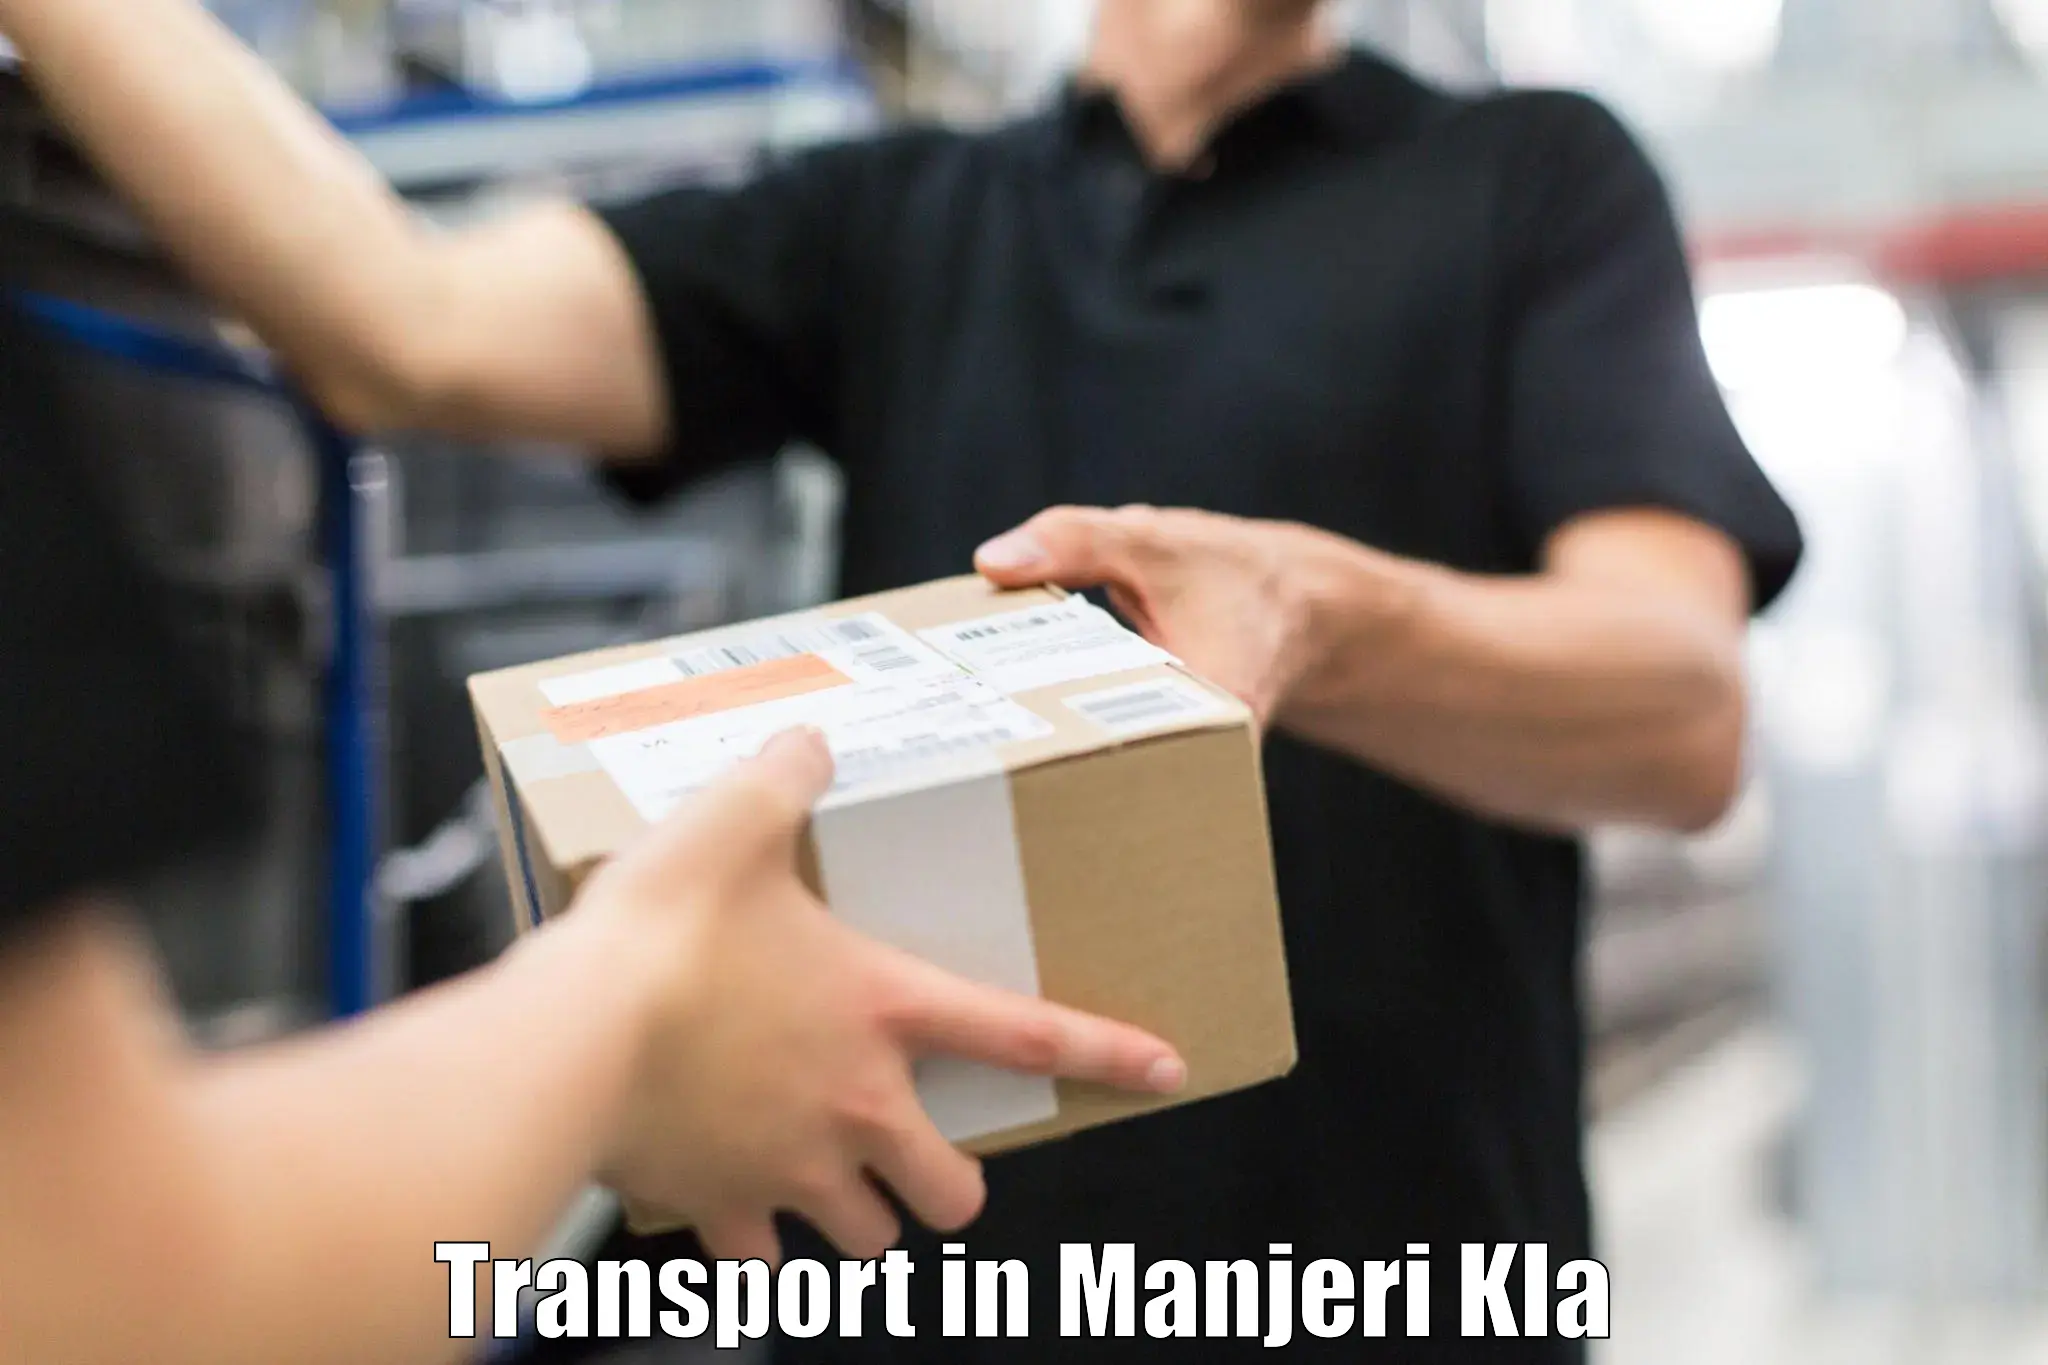 Air freight transport services in Manjeri Kla